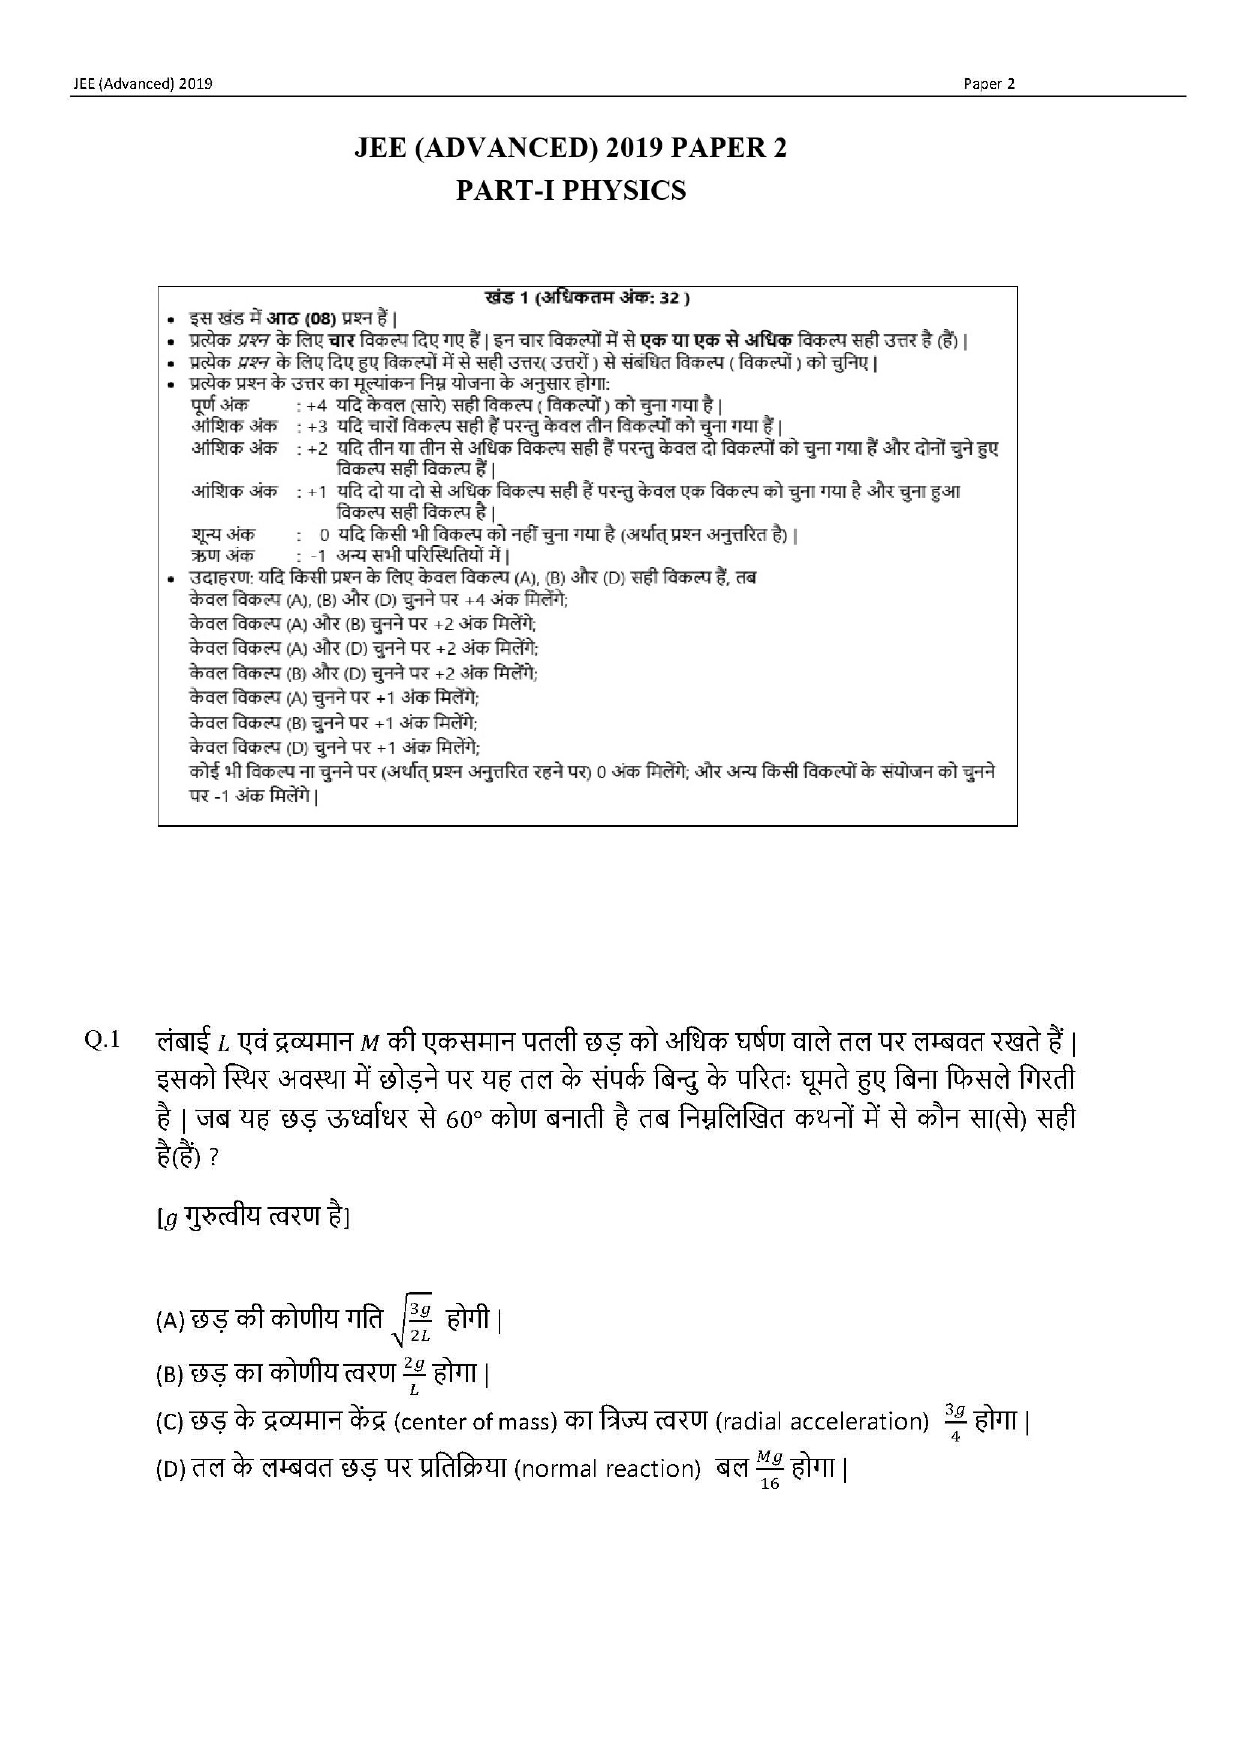 JEE Advanced Hindi Question Paper 2019 Paper 2 Physics 1